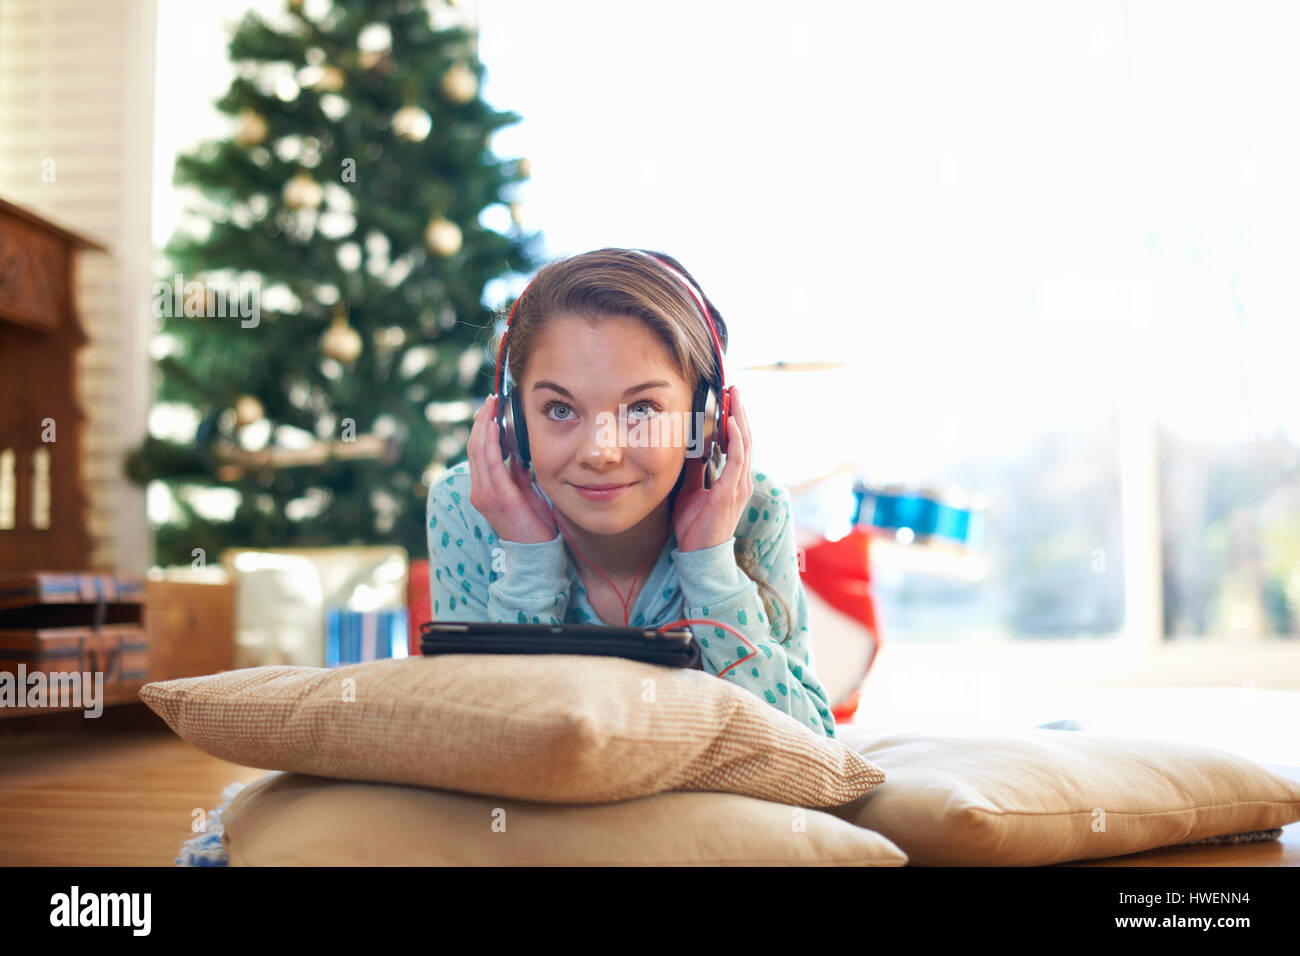 Girl lying on living room floor listening to headphones at Christmas Stock Photo